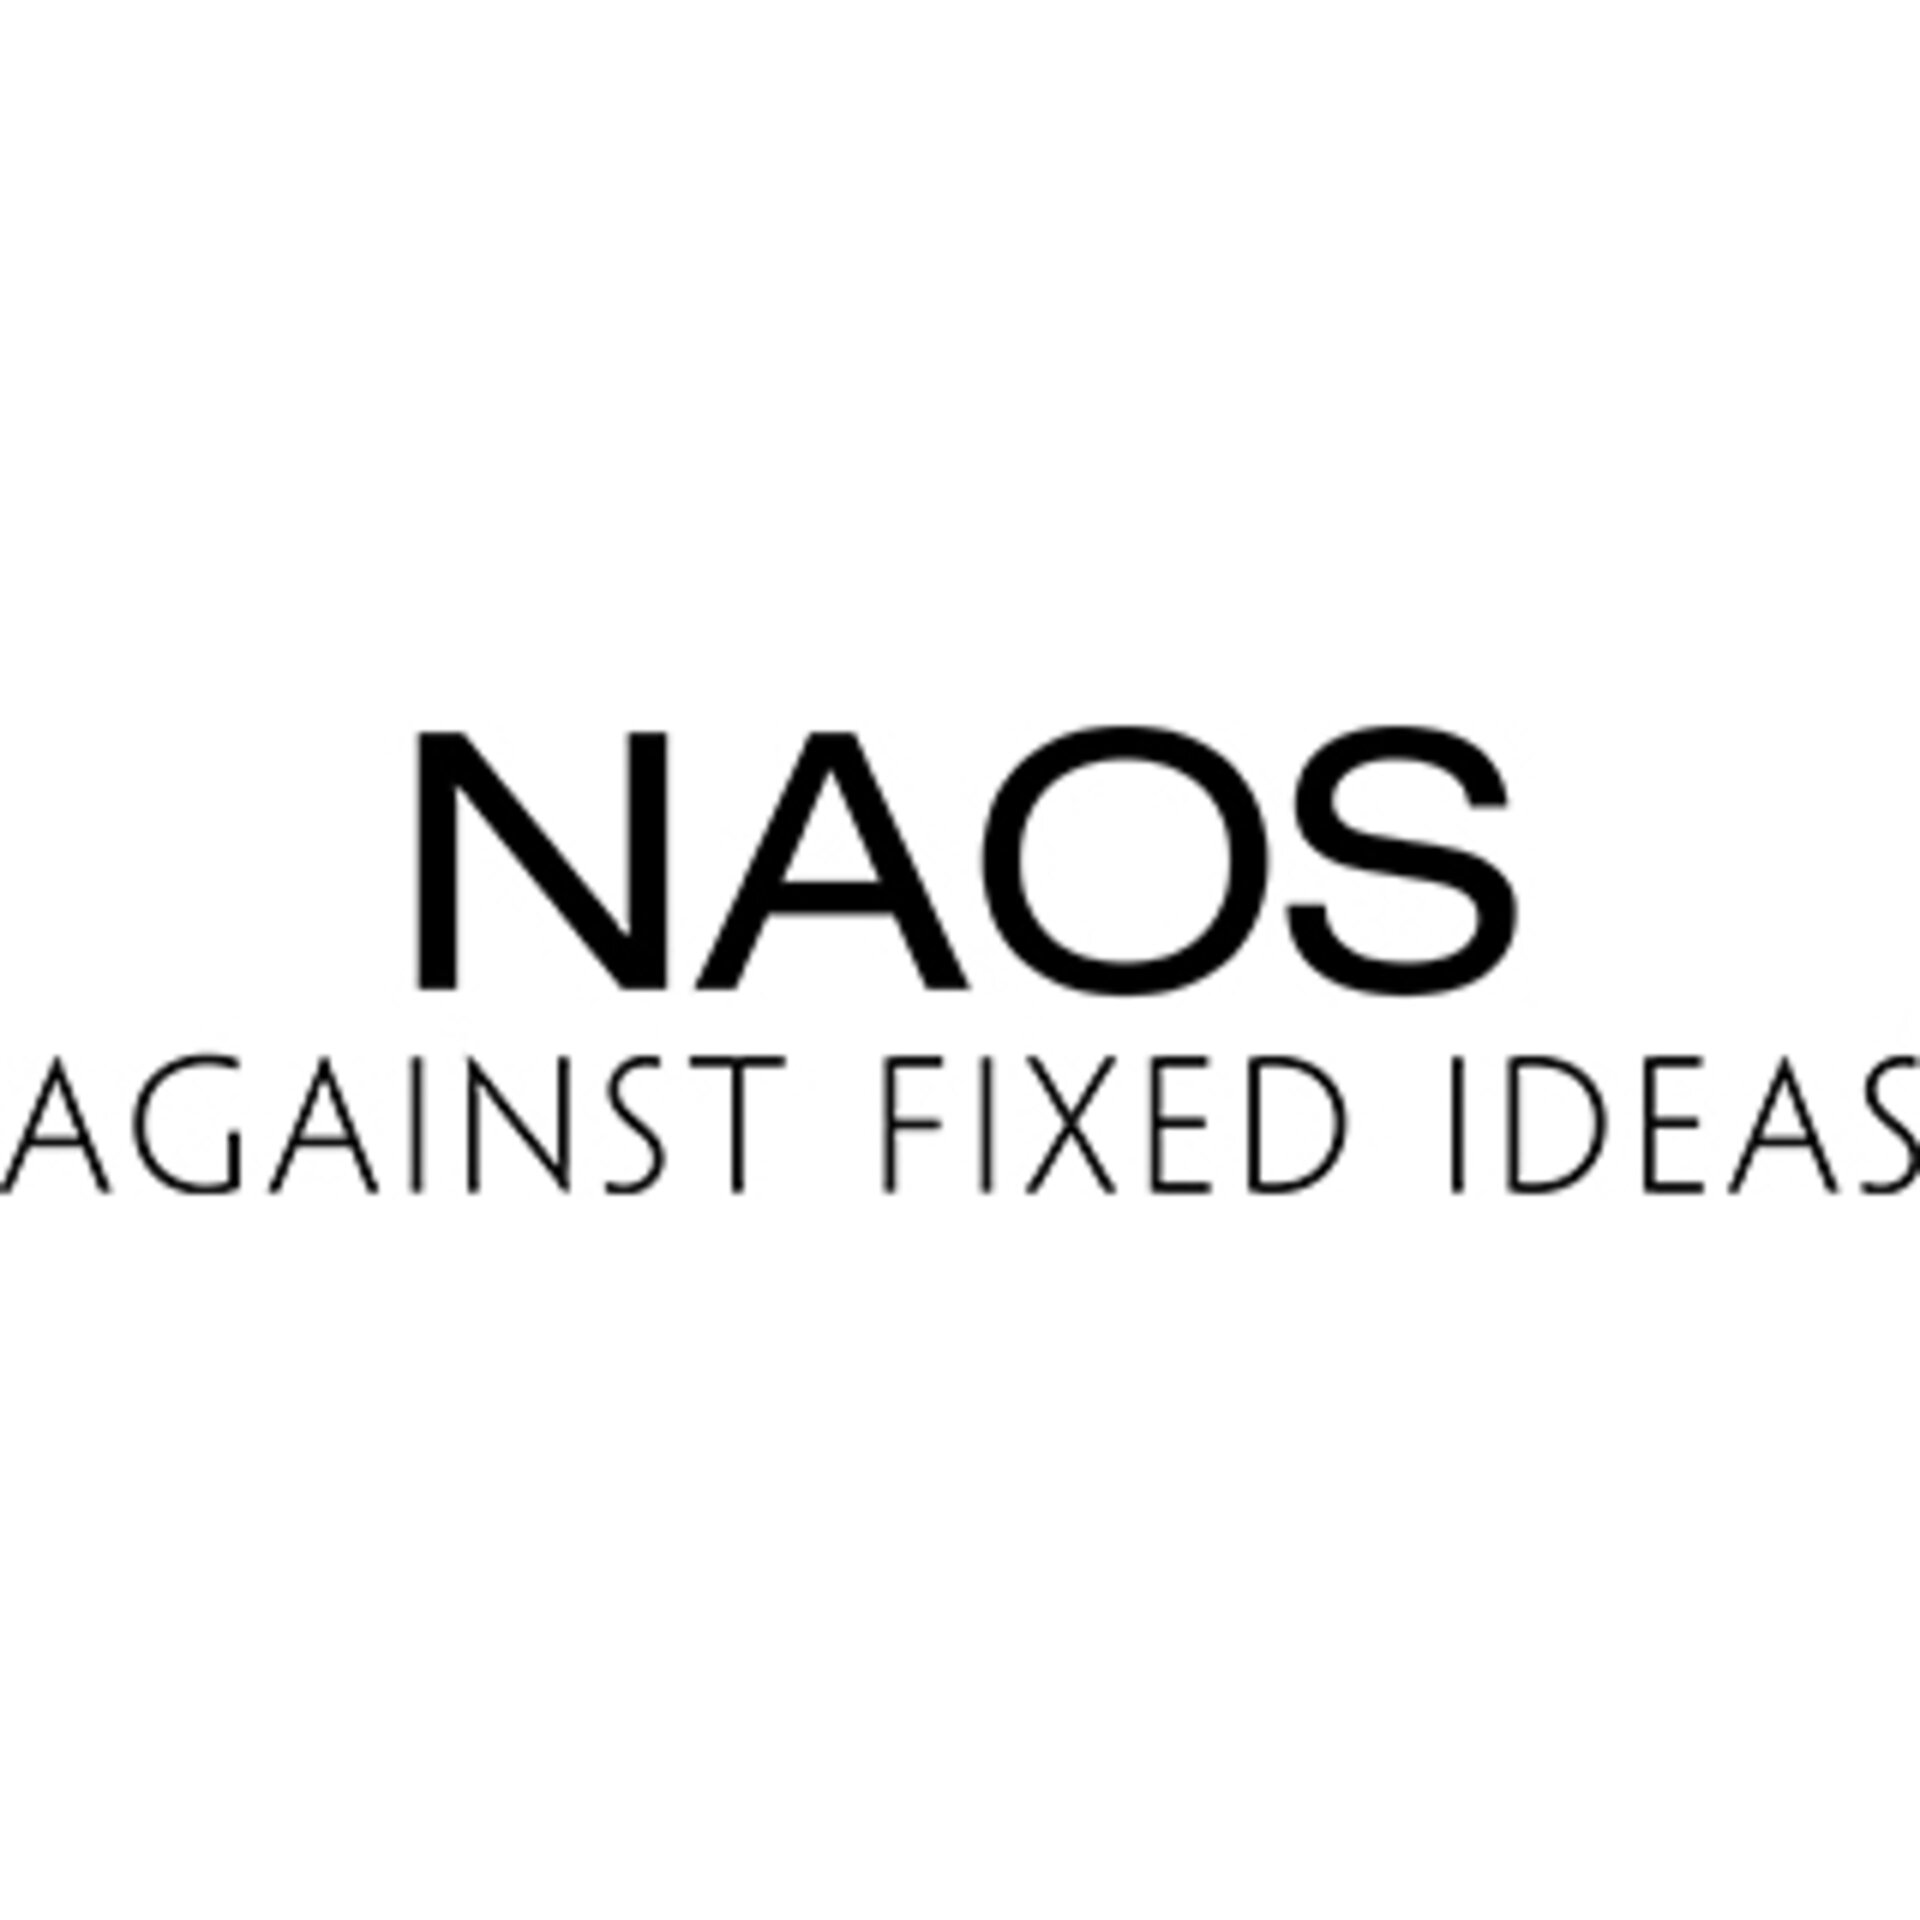 Logo "NAOS - Against Fixed IDEAS"